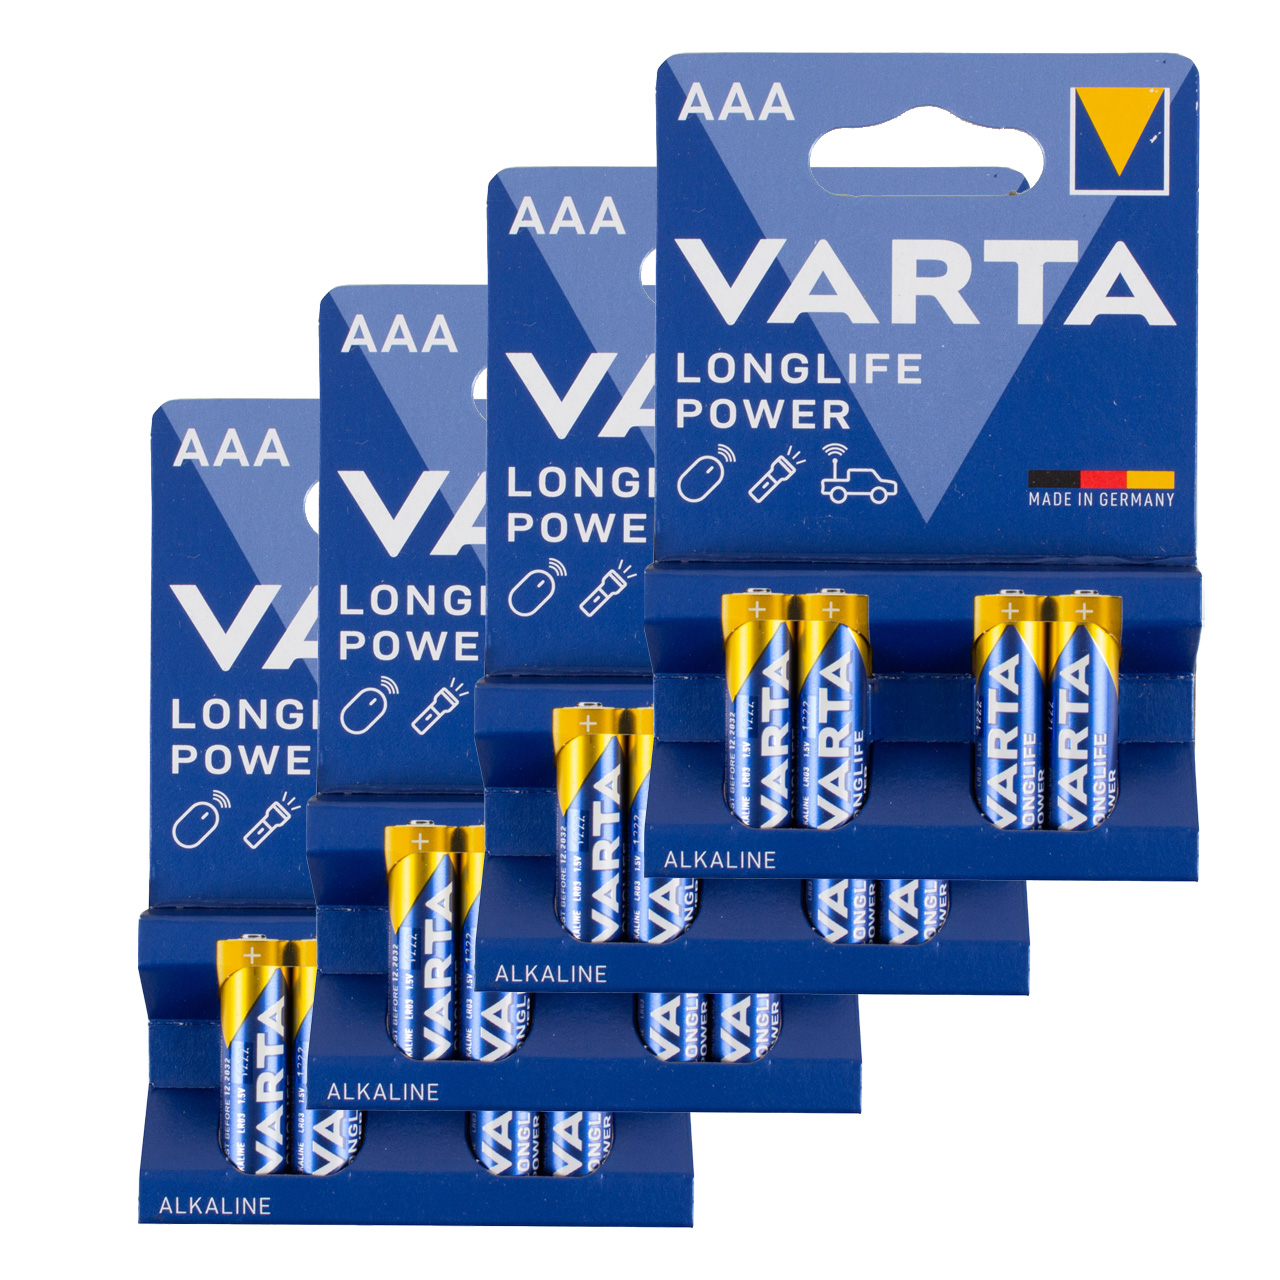 16x VARTA LONGLIFE POWER ALKALINE Batterie AAA MICRO 4903 LR03 MN2400 1,5V